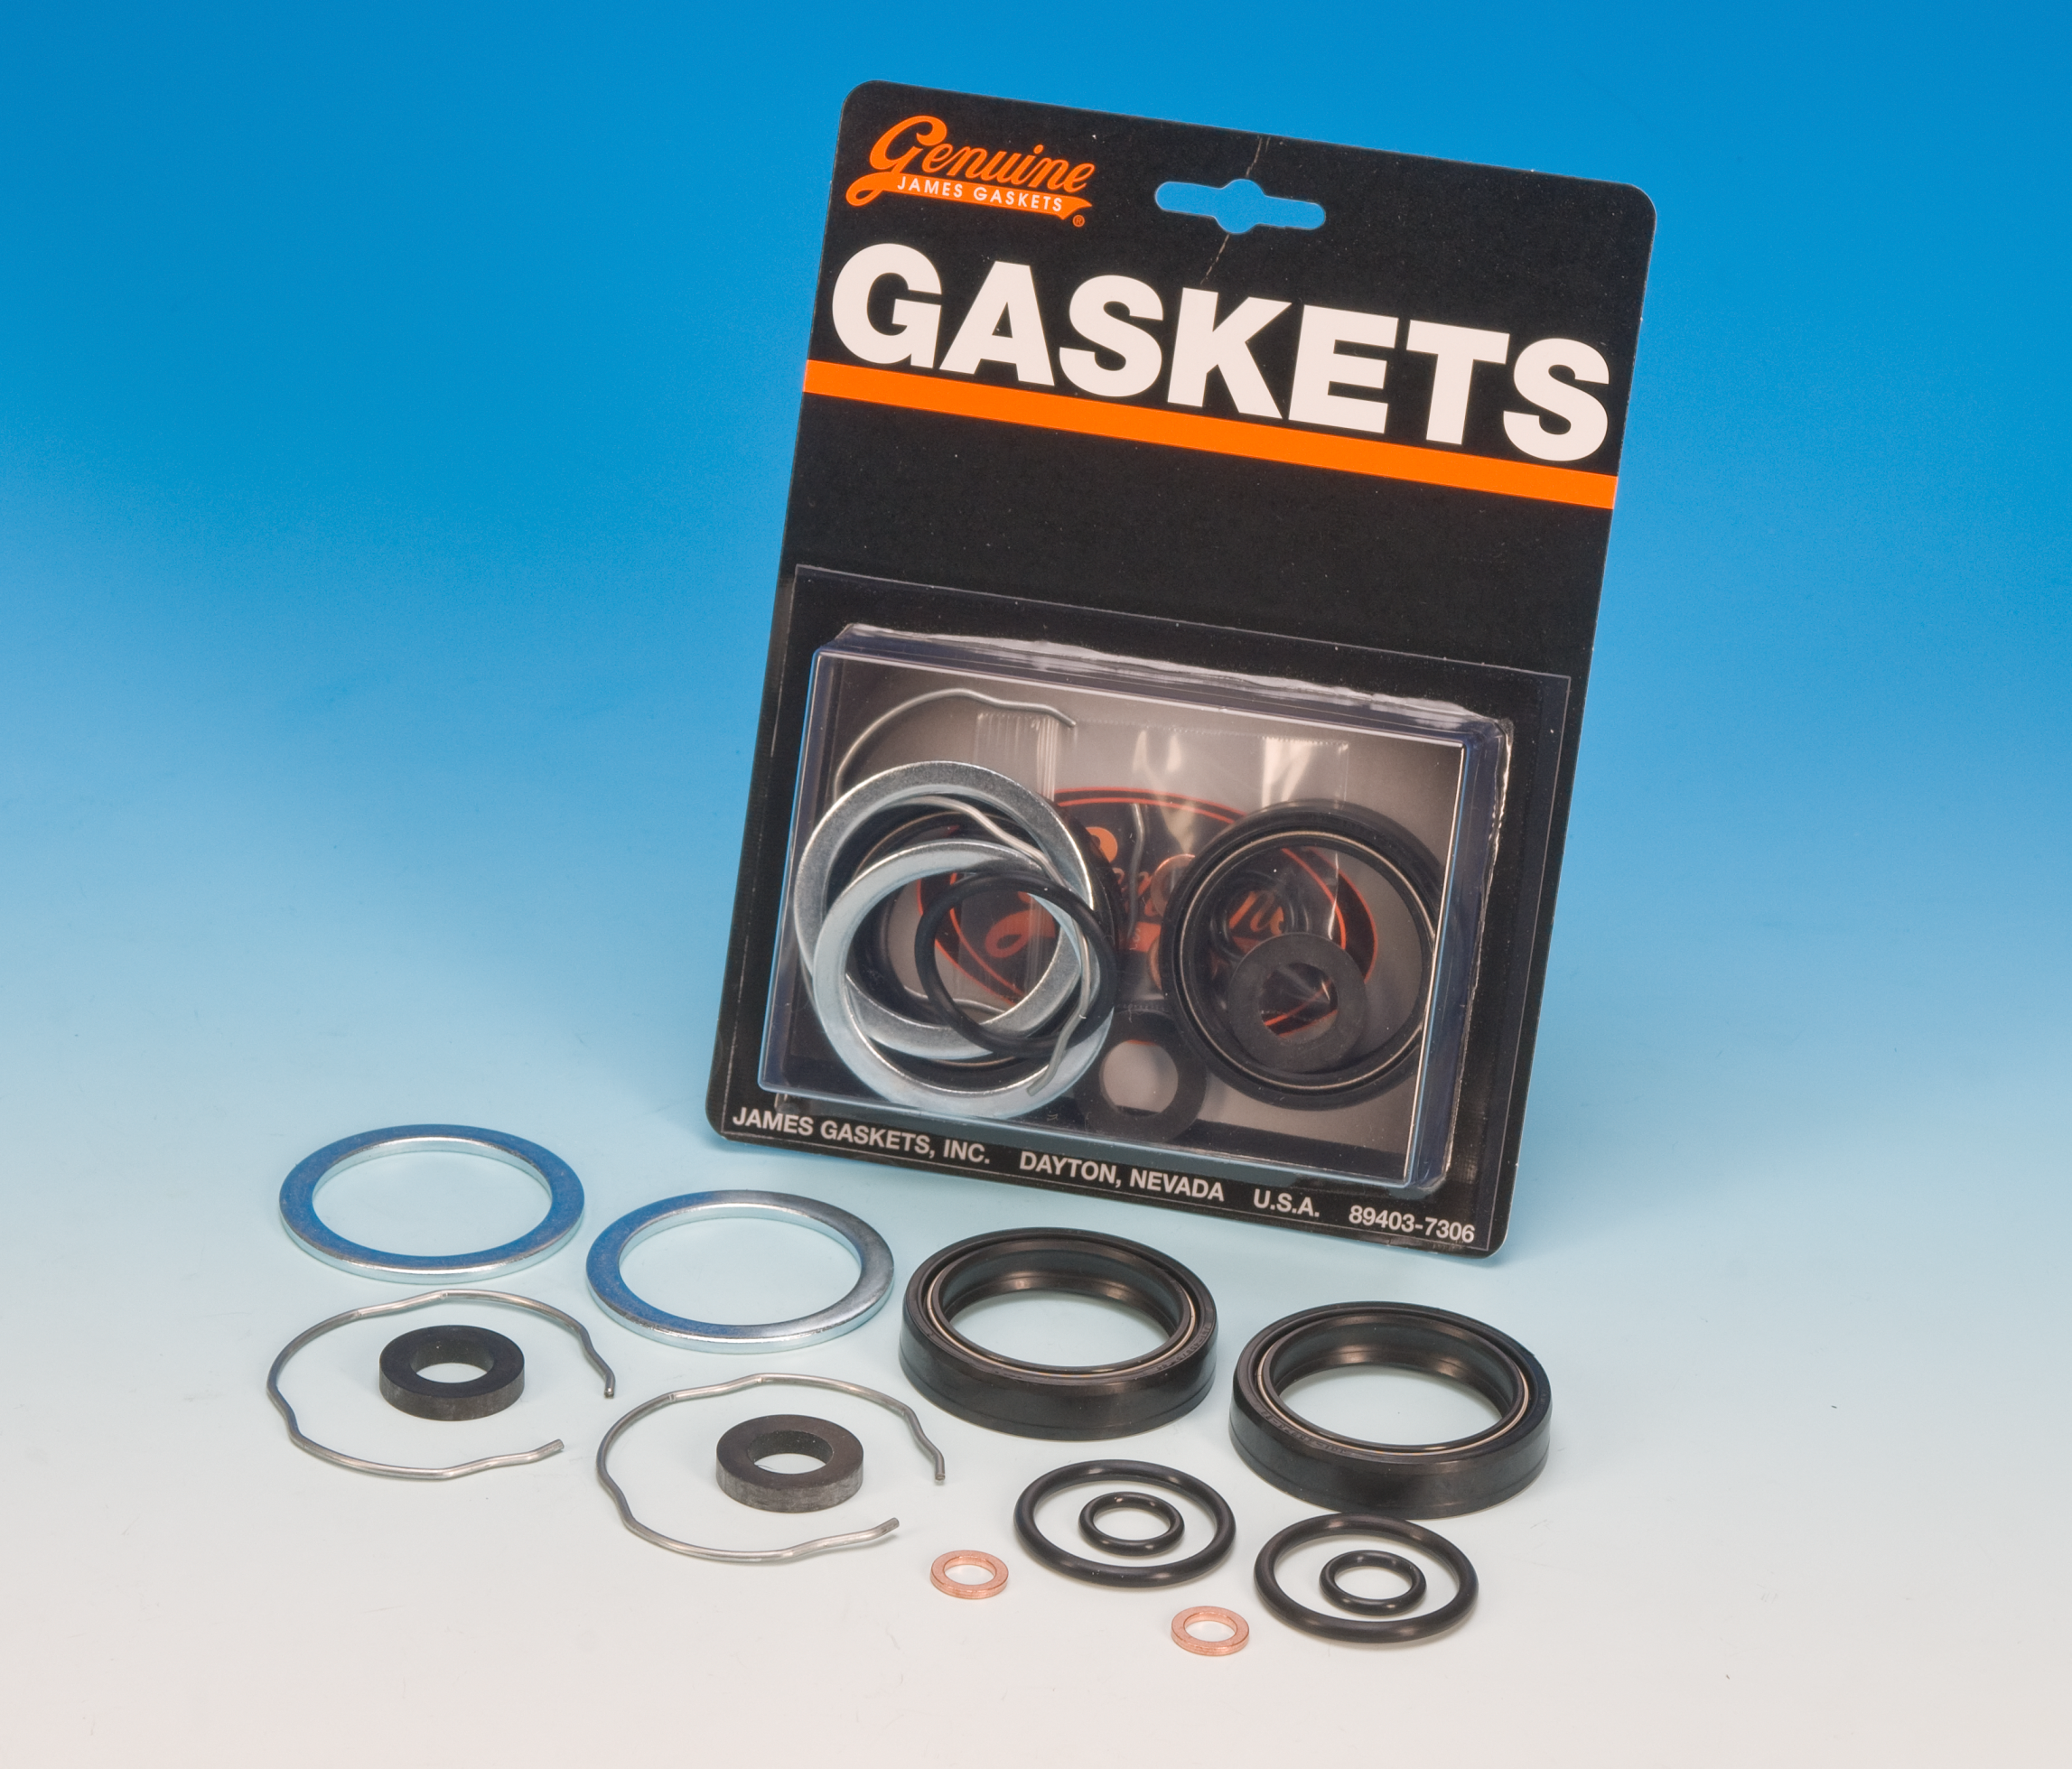 JGI-45849-84 41mm Fork Seal Kit for Harley 84-17 James Gaskets Inc